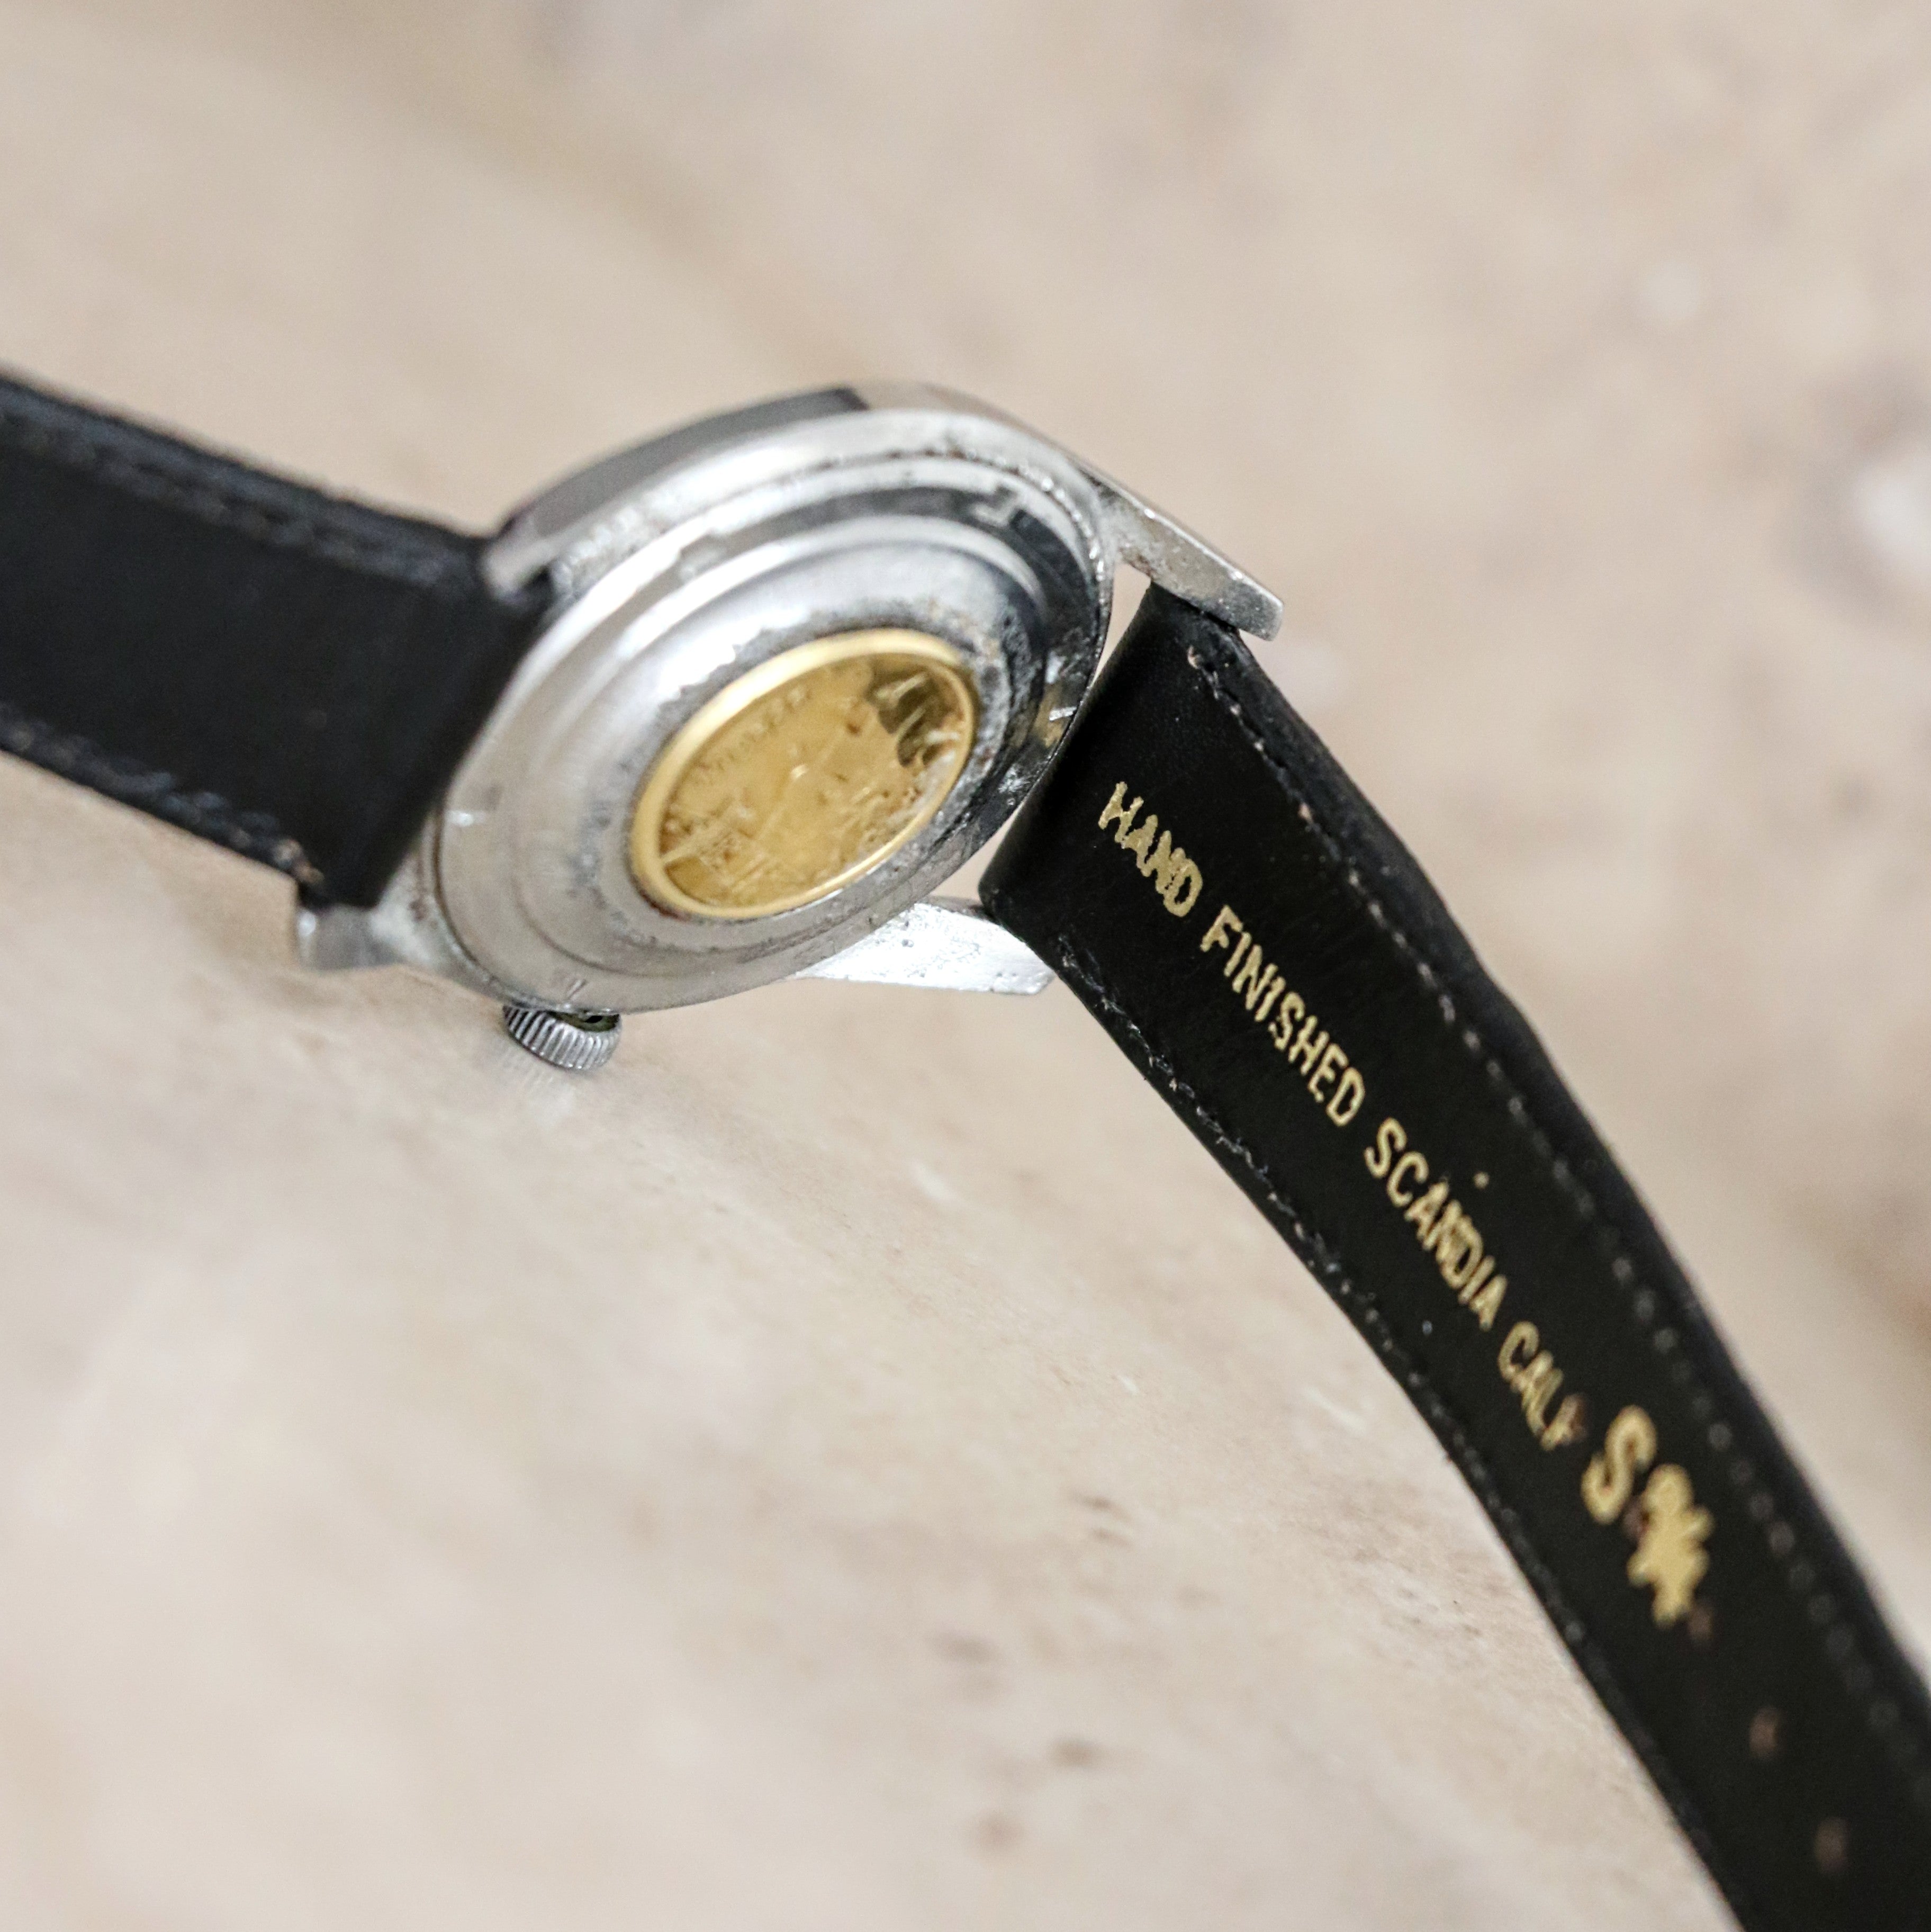 NIVADA Aquadatic Automatic Watch 21 Jewels Cal. ETA 2452 Swiss Made Wristwatch